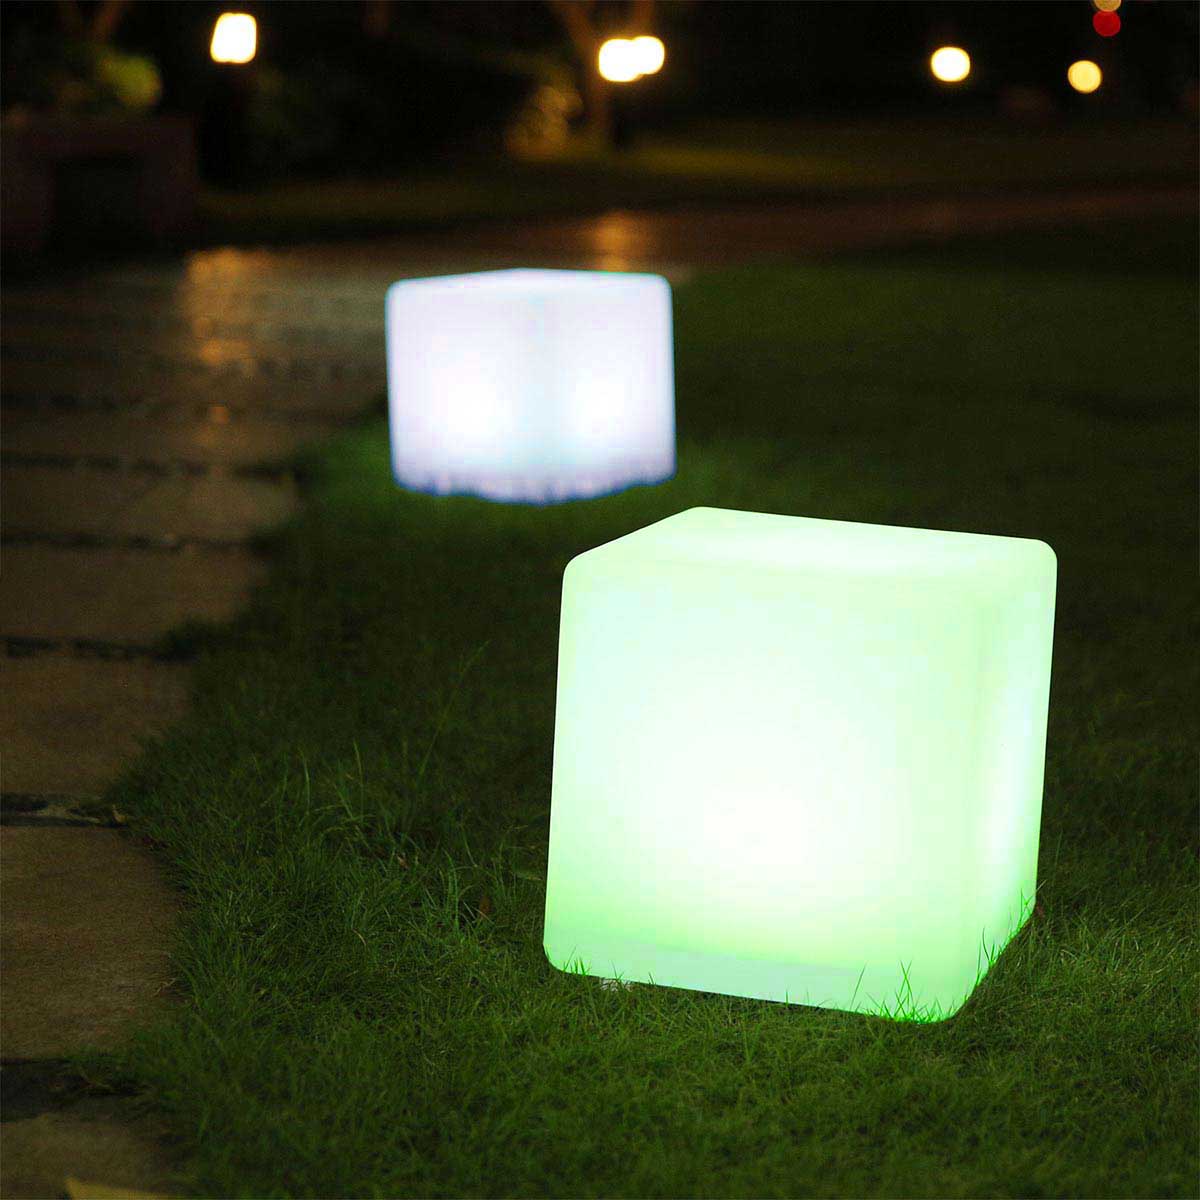 Cube lumineux sans fil led carry c30